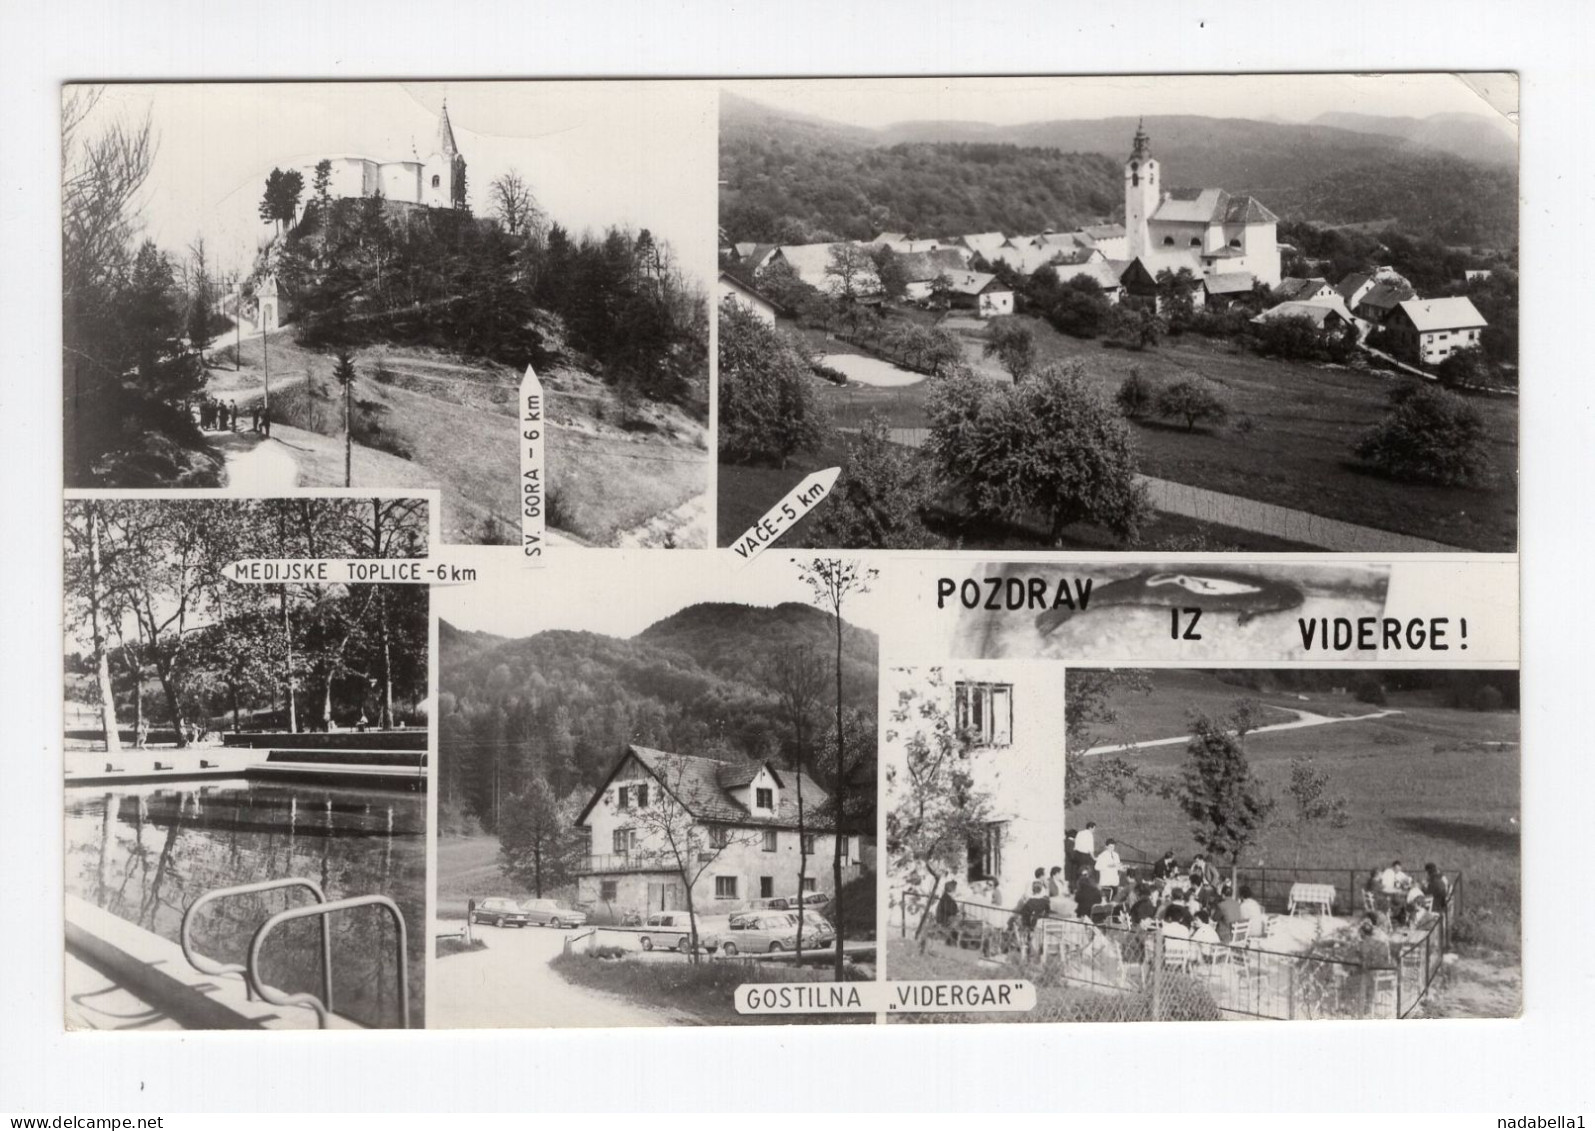 1950s YUGOSLAVIA,SLOVENIA,IZLAKE POSTMARK,GREETINGS FROM VIDERGE,MULTI VIEW POSTCARD,USED - Yougoslavie